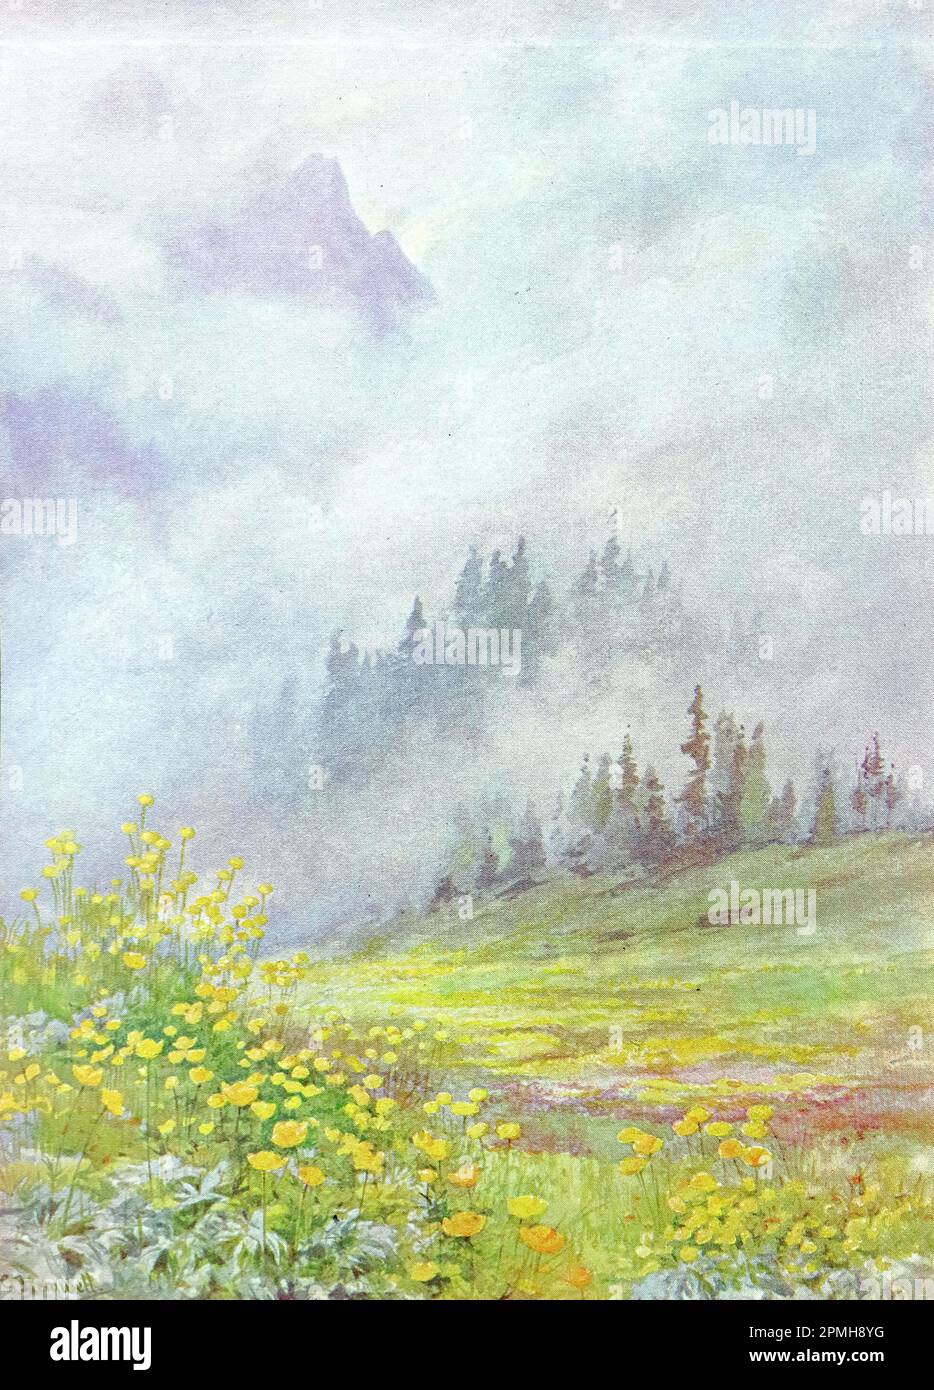 Trollius Europaeus, the Globe Flower, on the cloud swept fields in early June. From: 1911, G. Flemwell. The Flower Fields of Alpine Switzerland Stock Photo